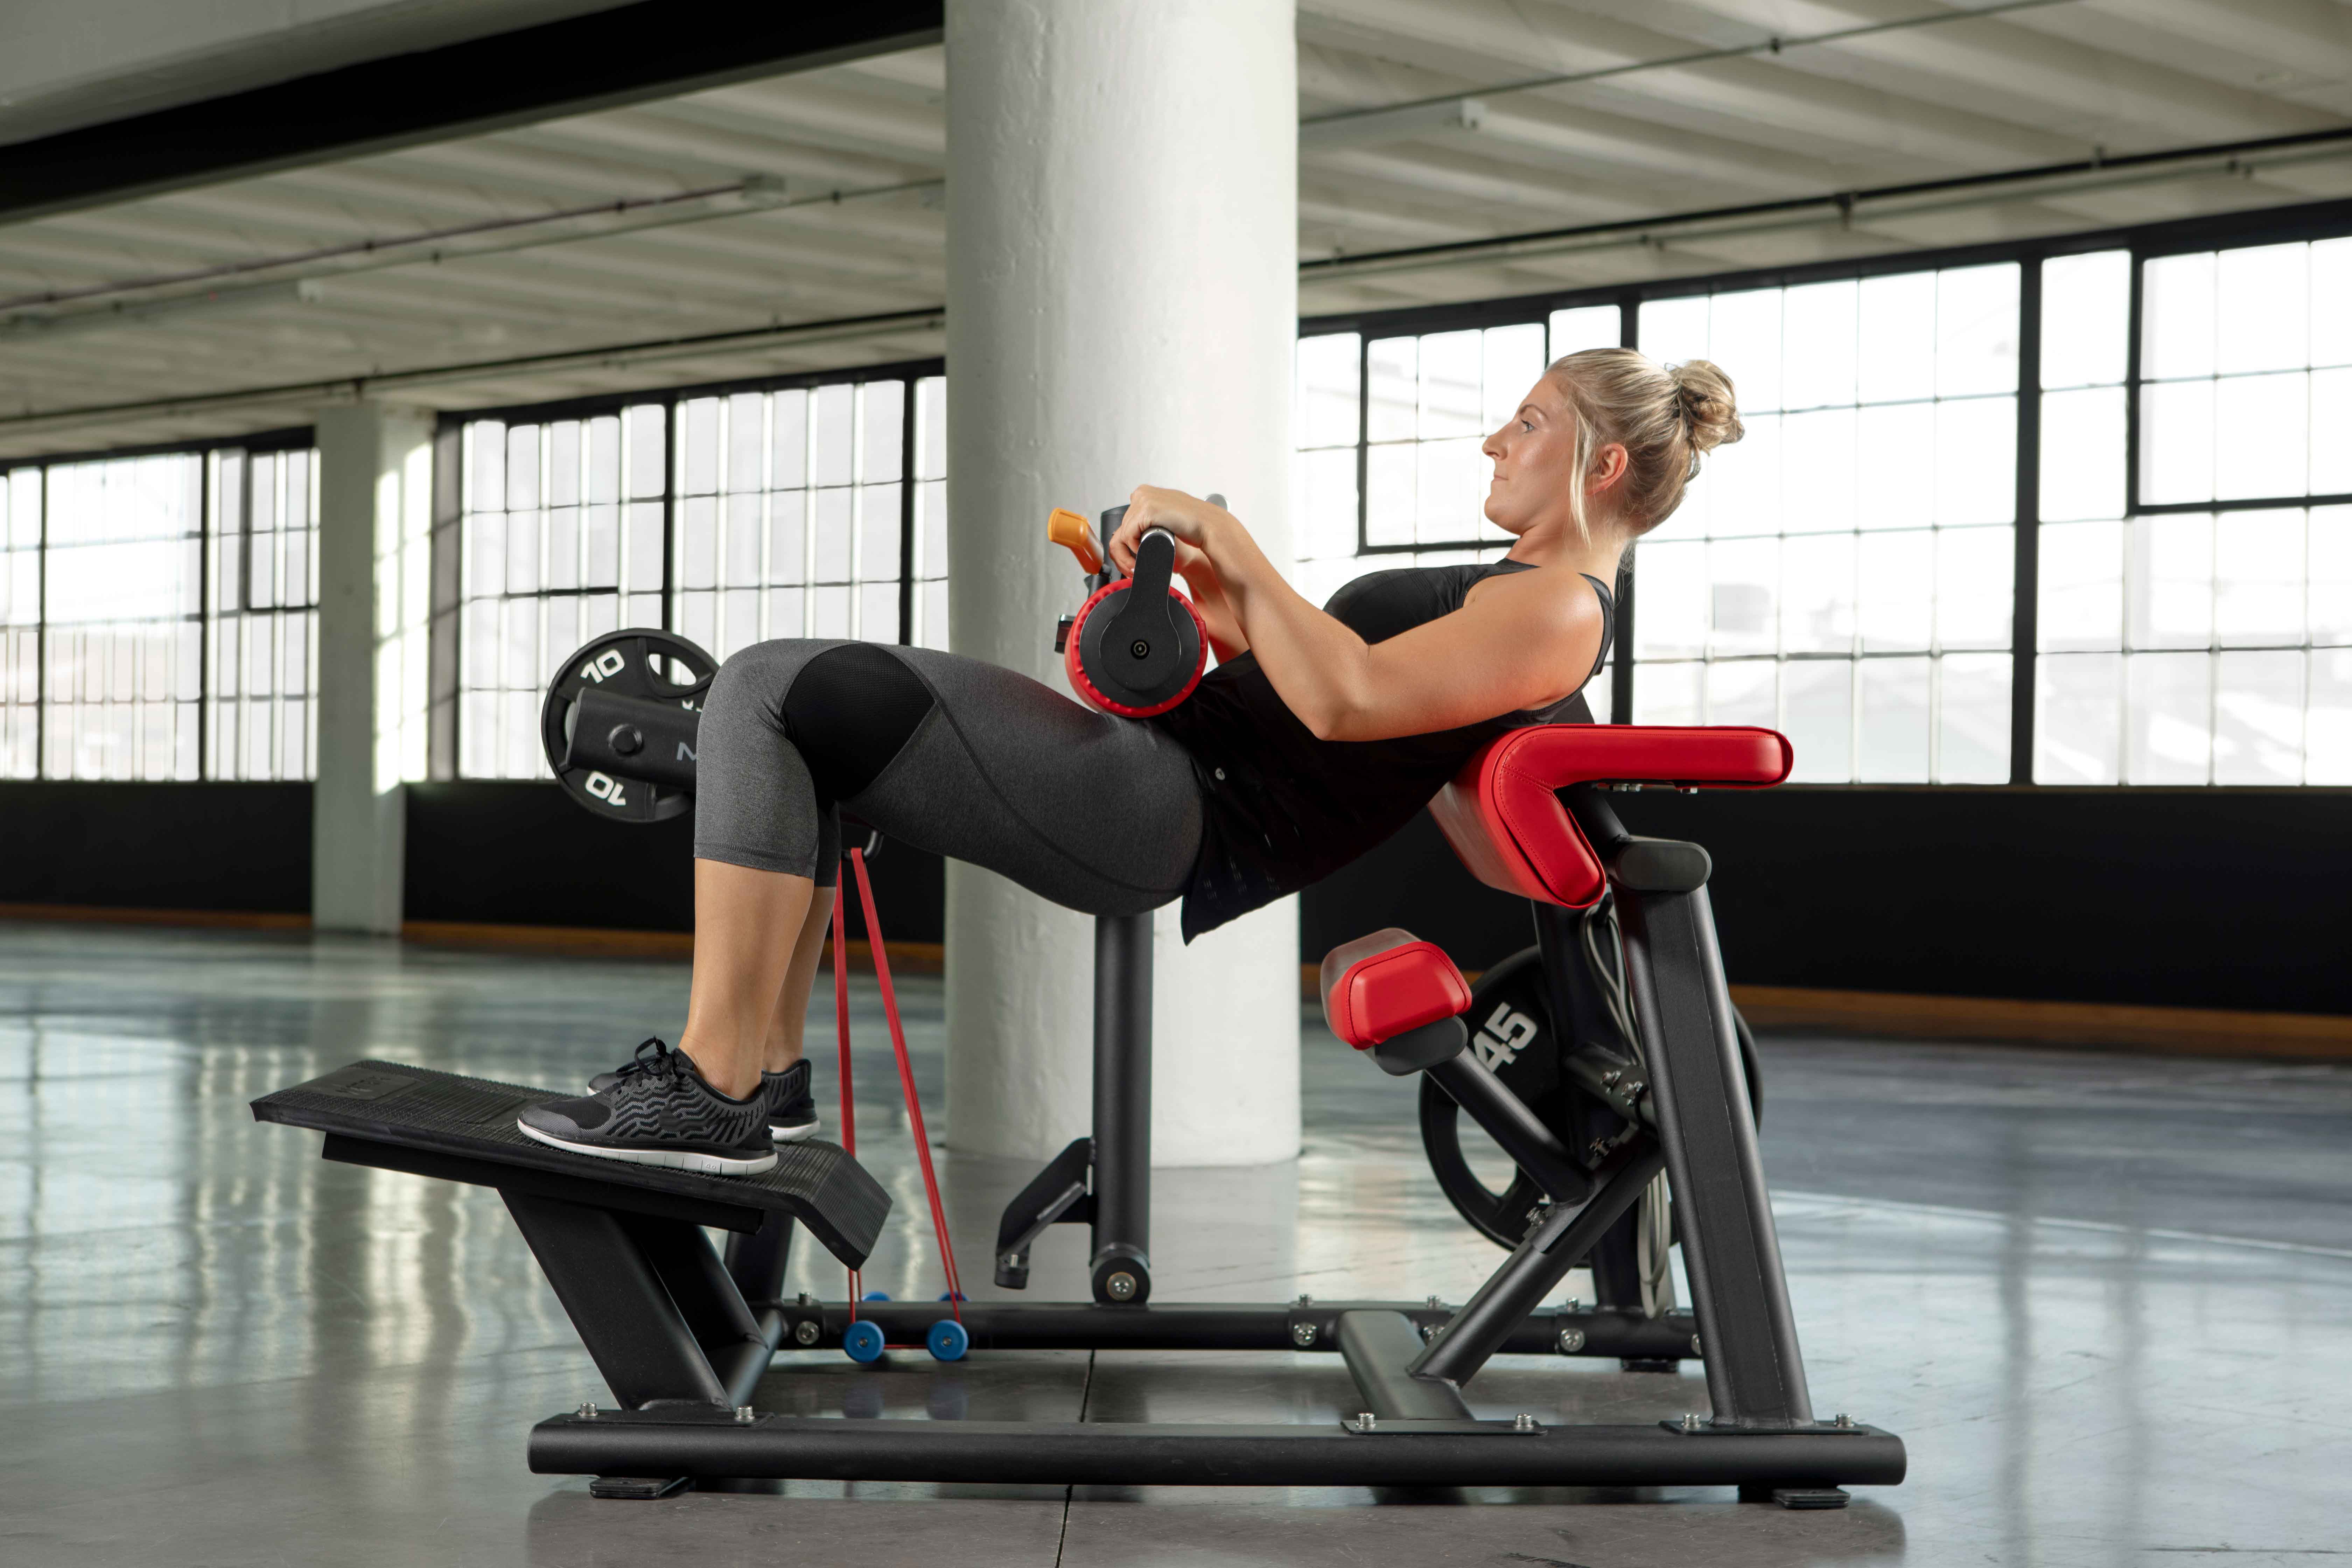 Matrix Fitness: Commercial fitness equipment | spabusiness.com company profile